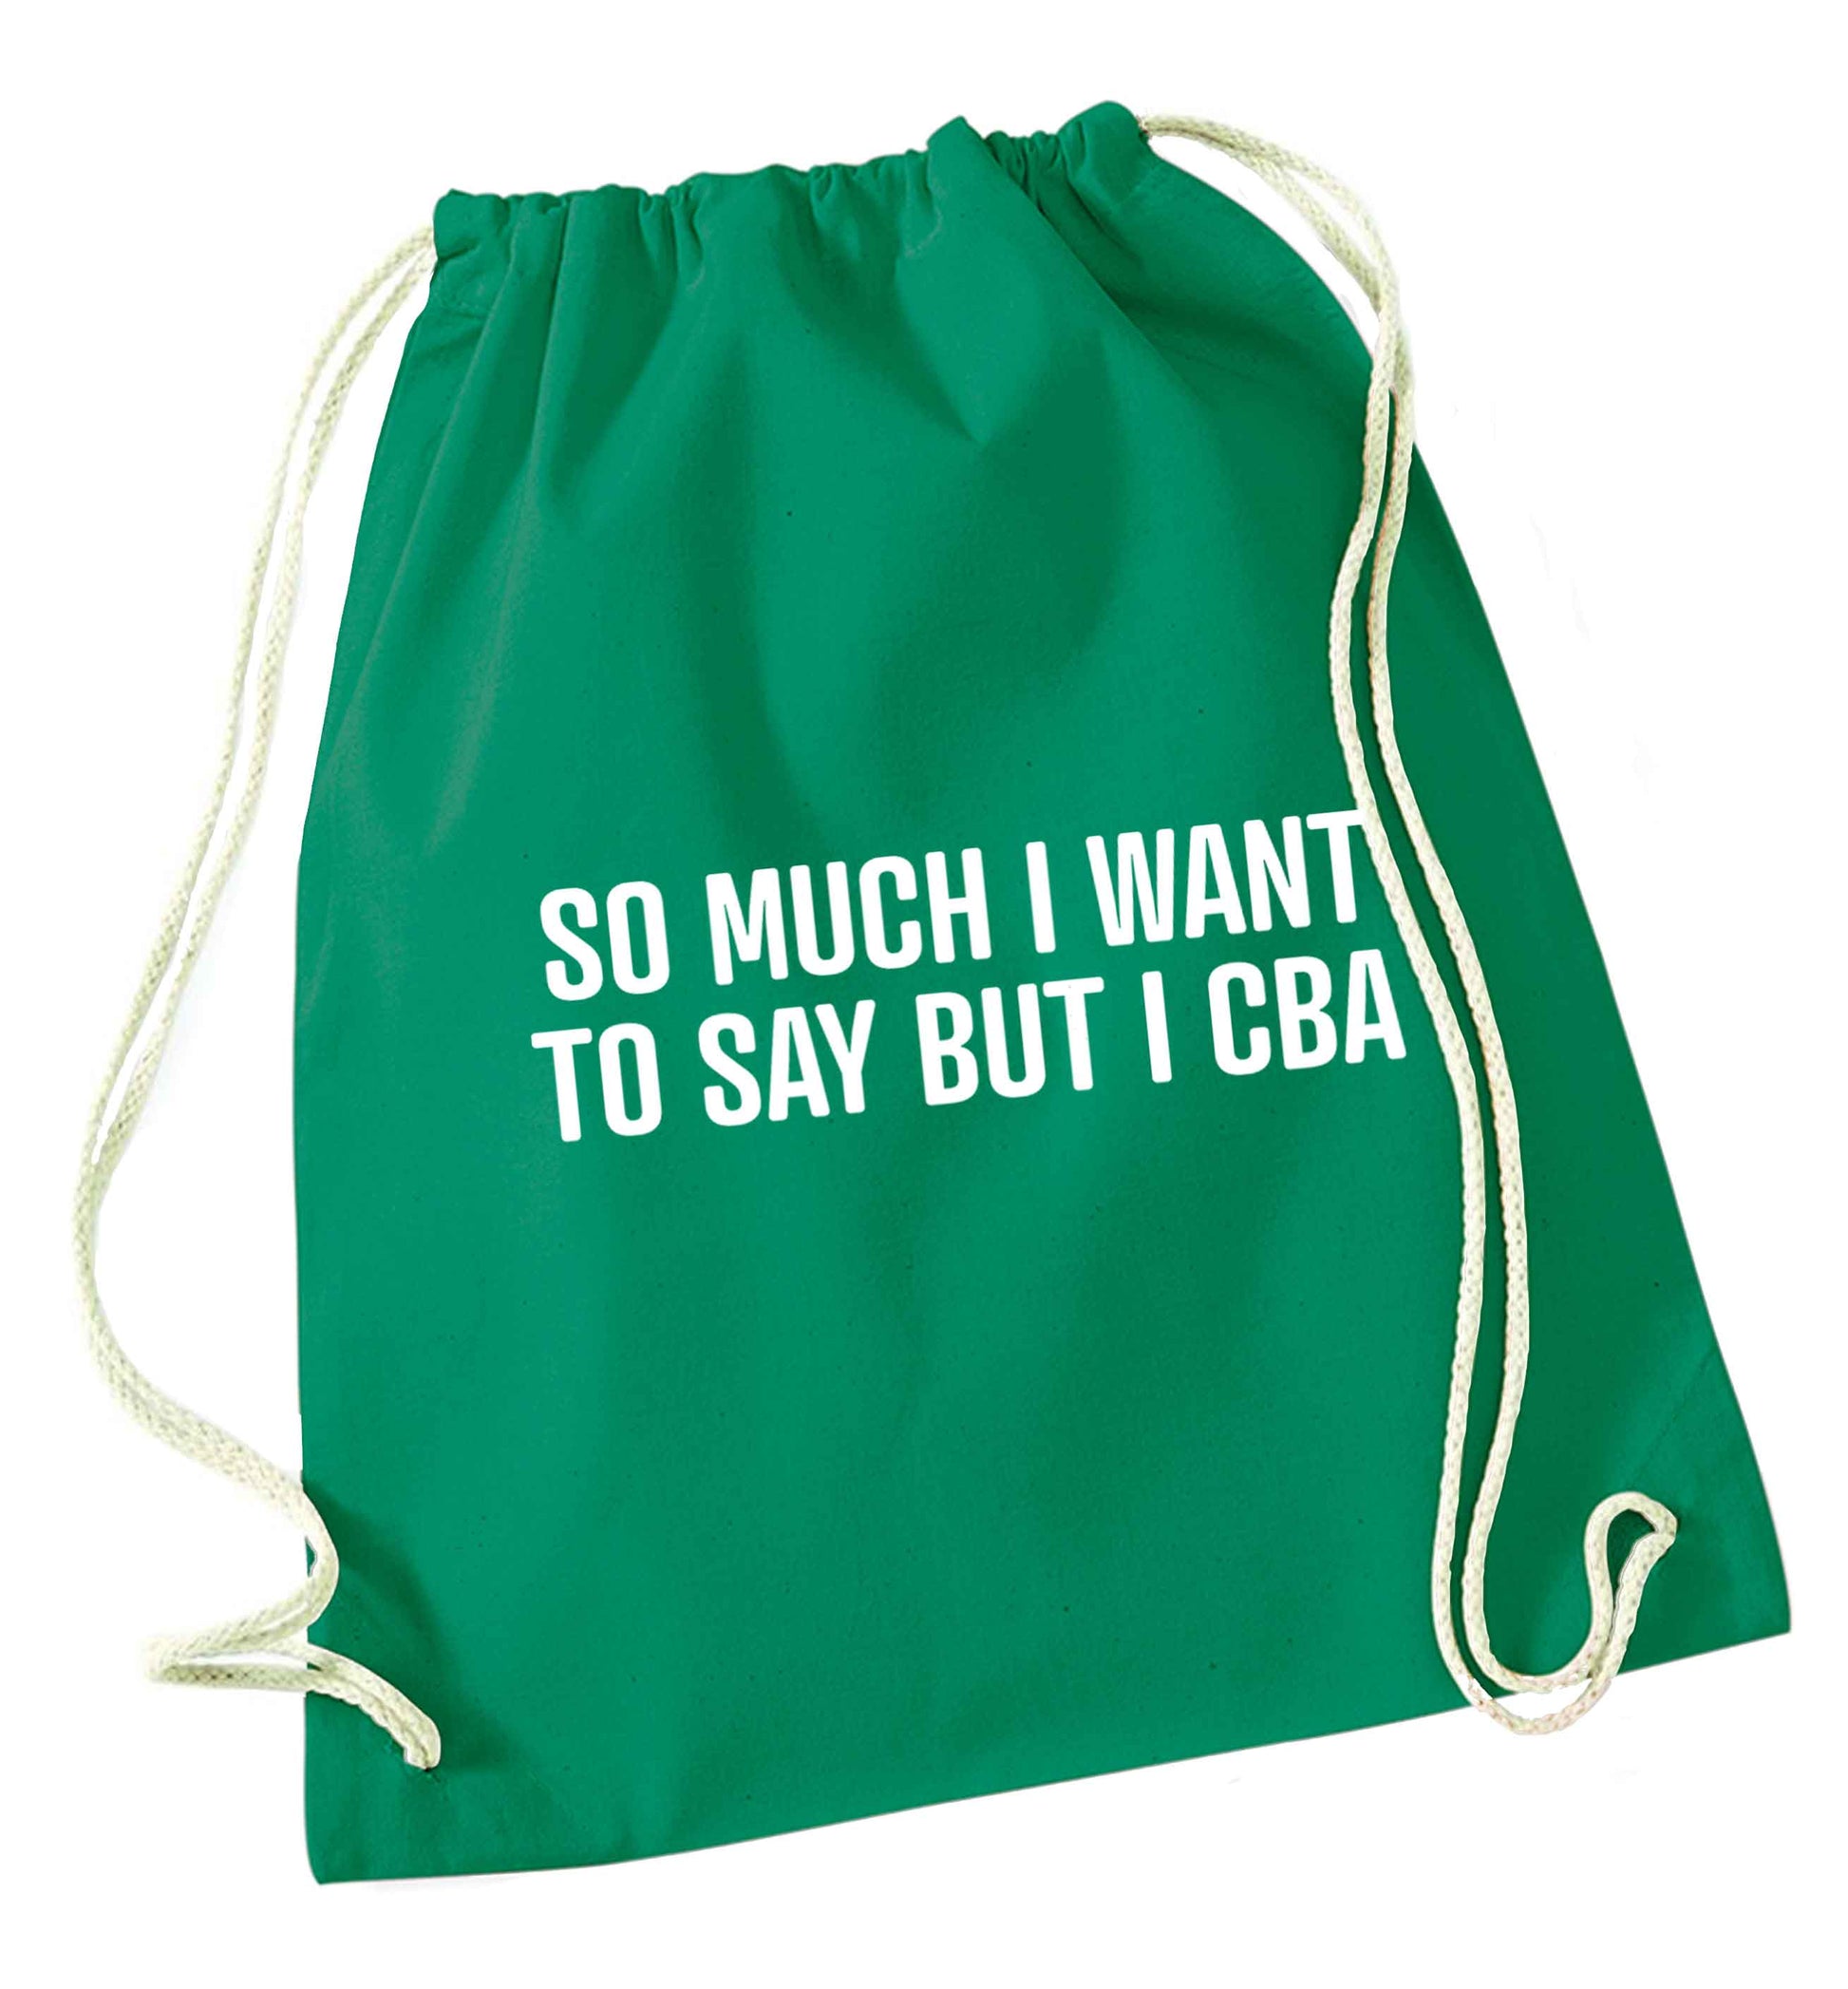 So much I want to say I cba  green drawstring bag